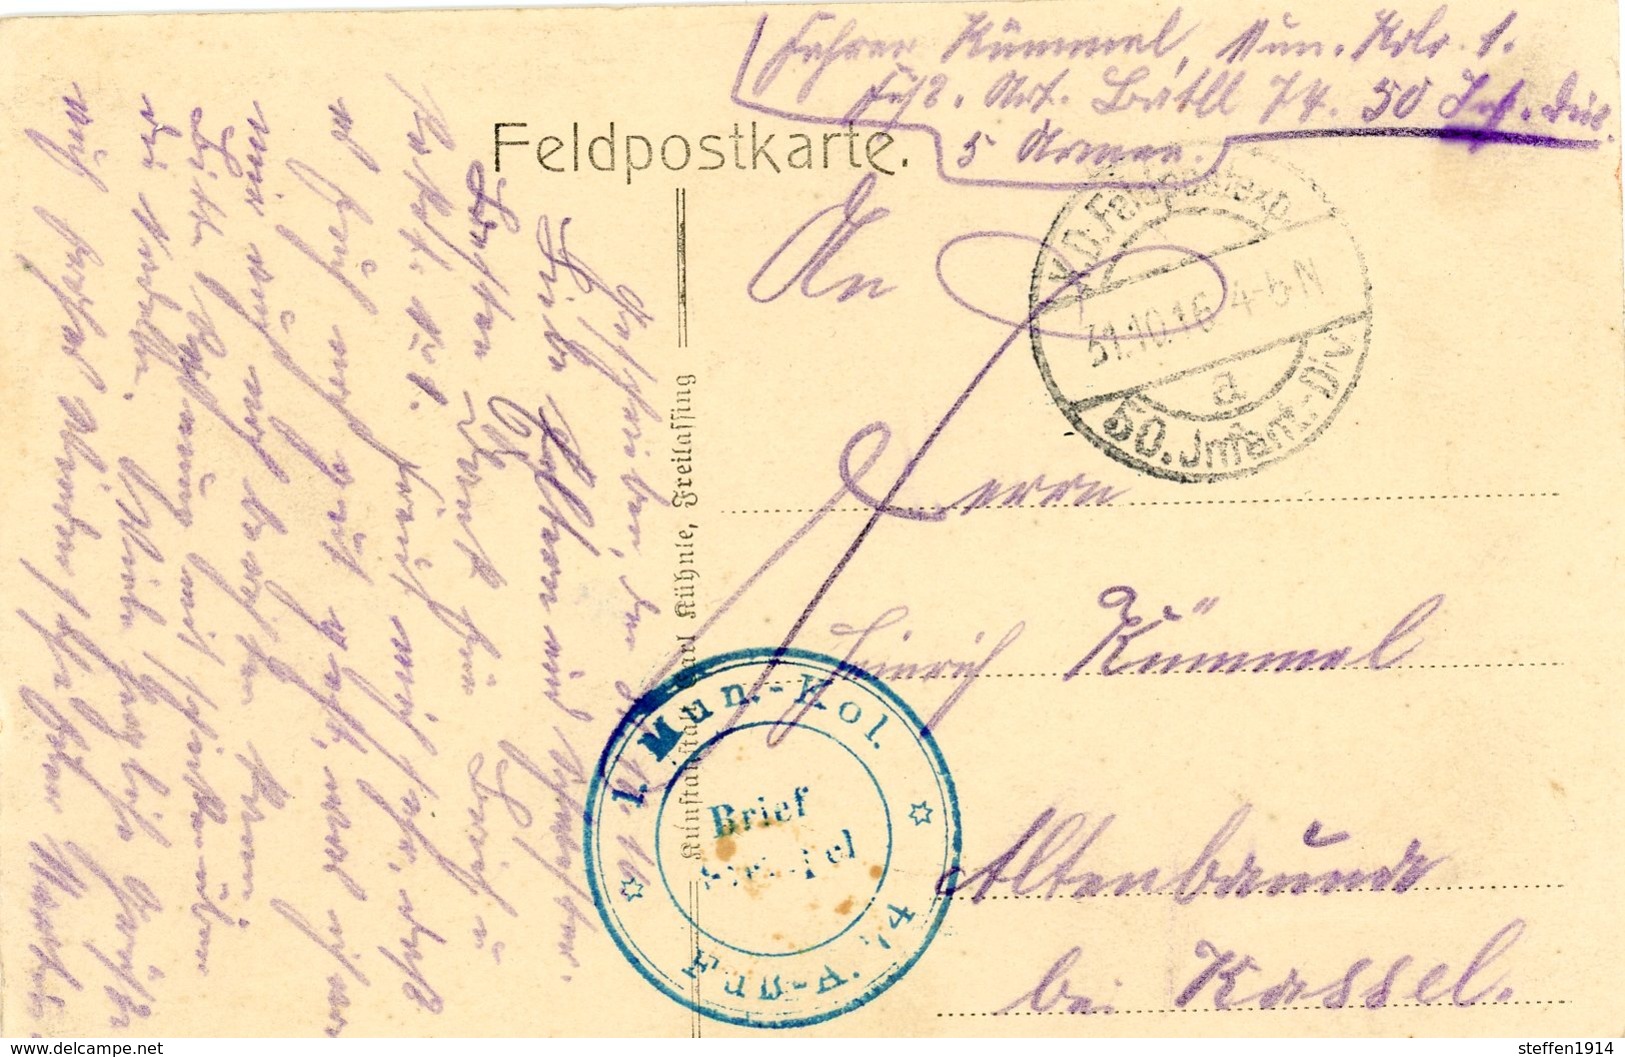 Friedhof  Dannevoux  - Allemande Feldpost-carte Postale -1914-1918 WWI - Guerre 1914-18